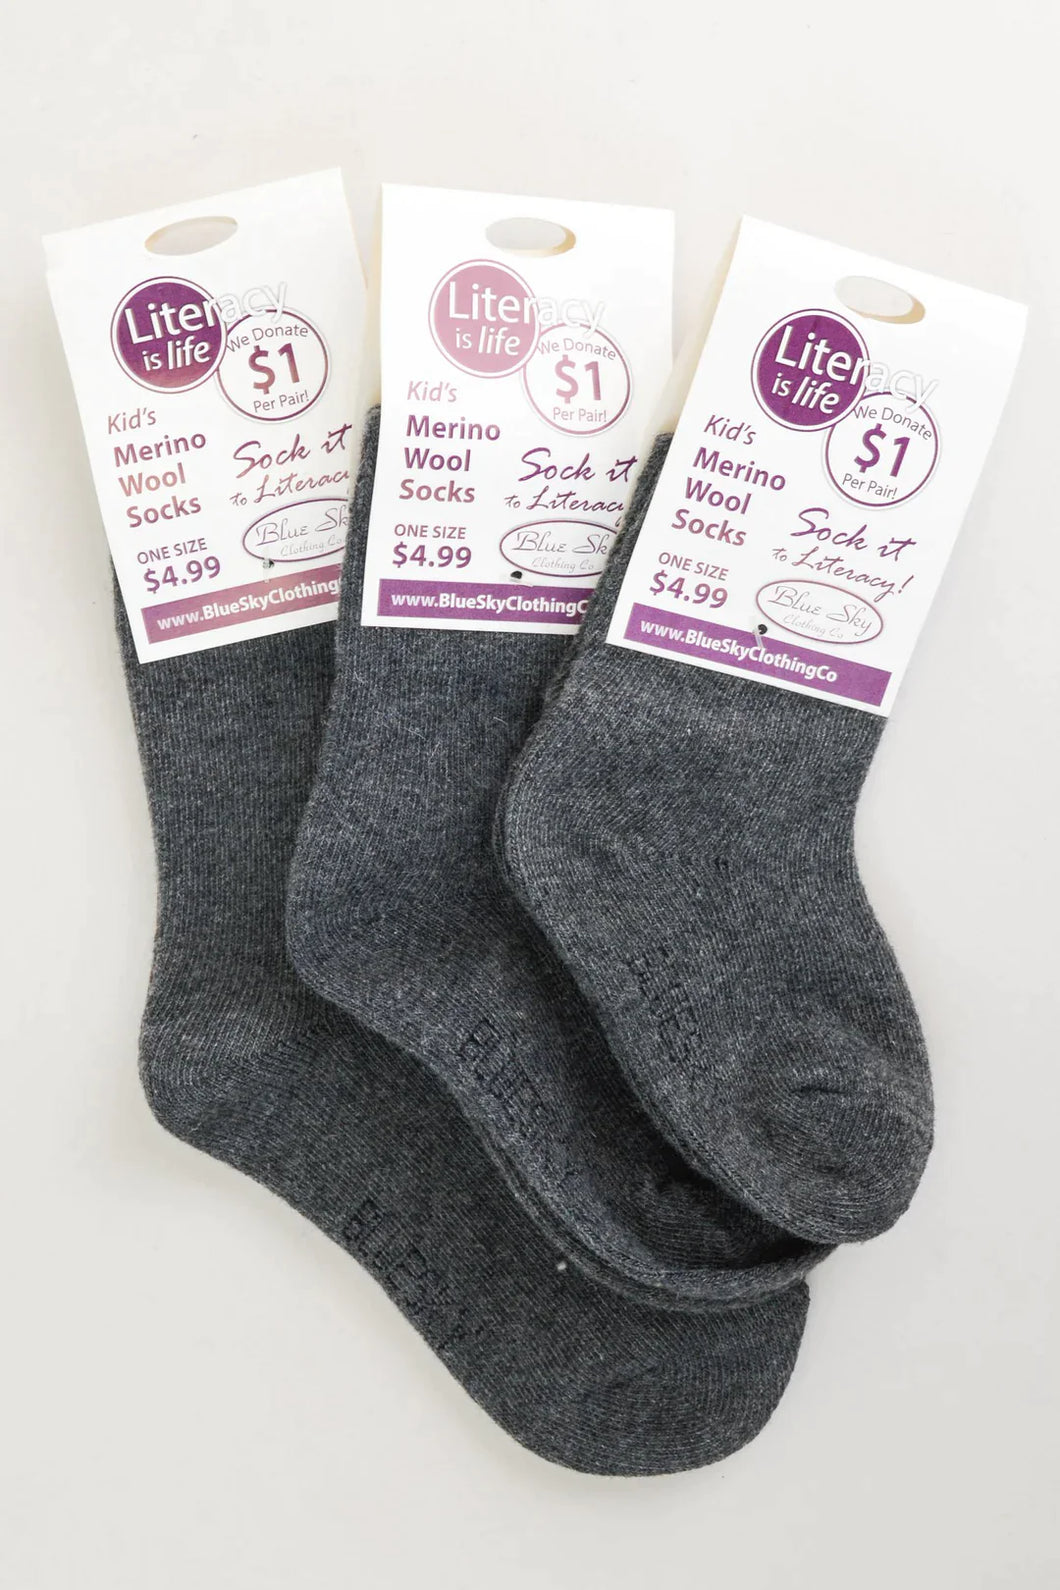 Blue Sky Clothing Merino Wool Socks in Charcoal Grey: Size 3T-7